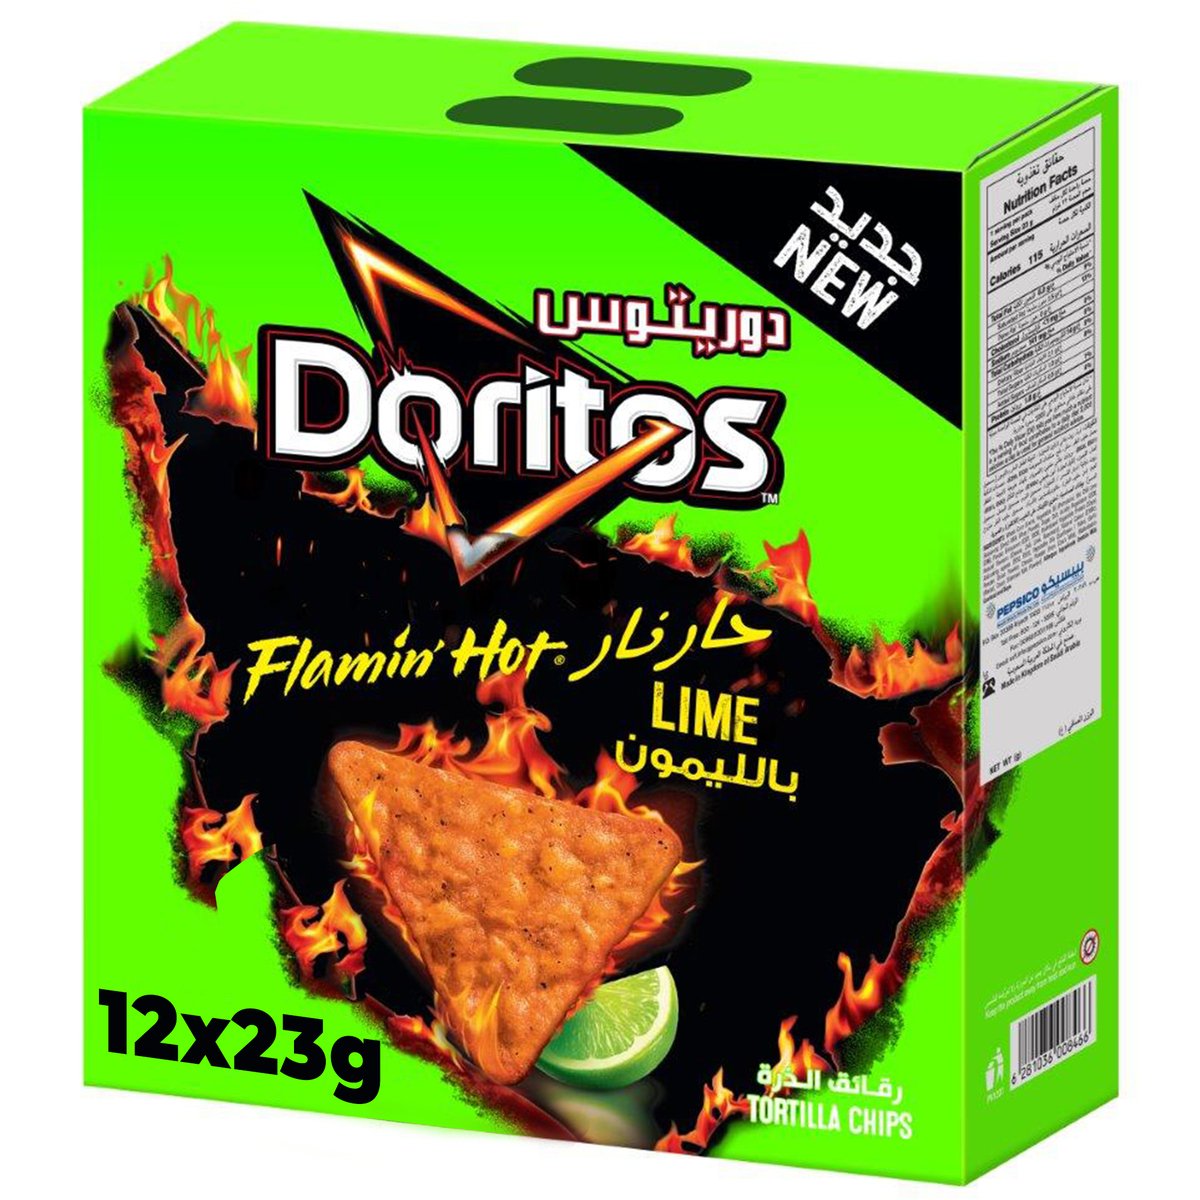 Doritos Flamin Hot Lime Tortilla Chips 12 x 23 g